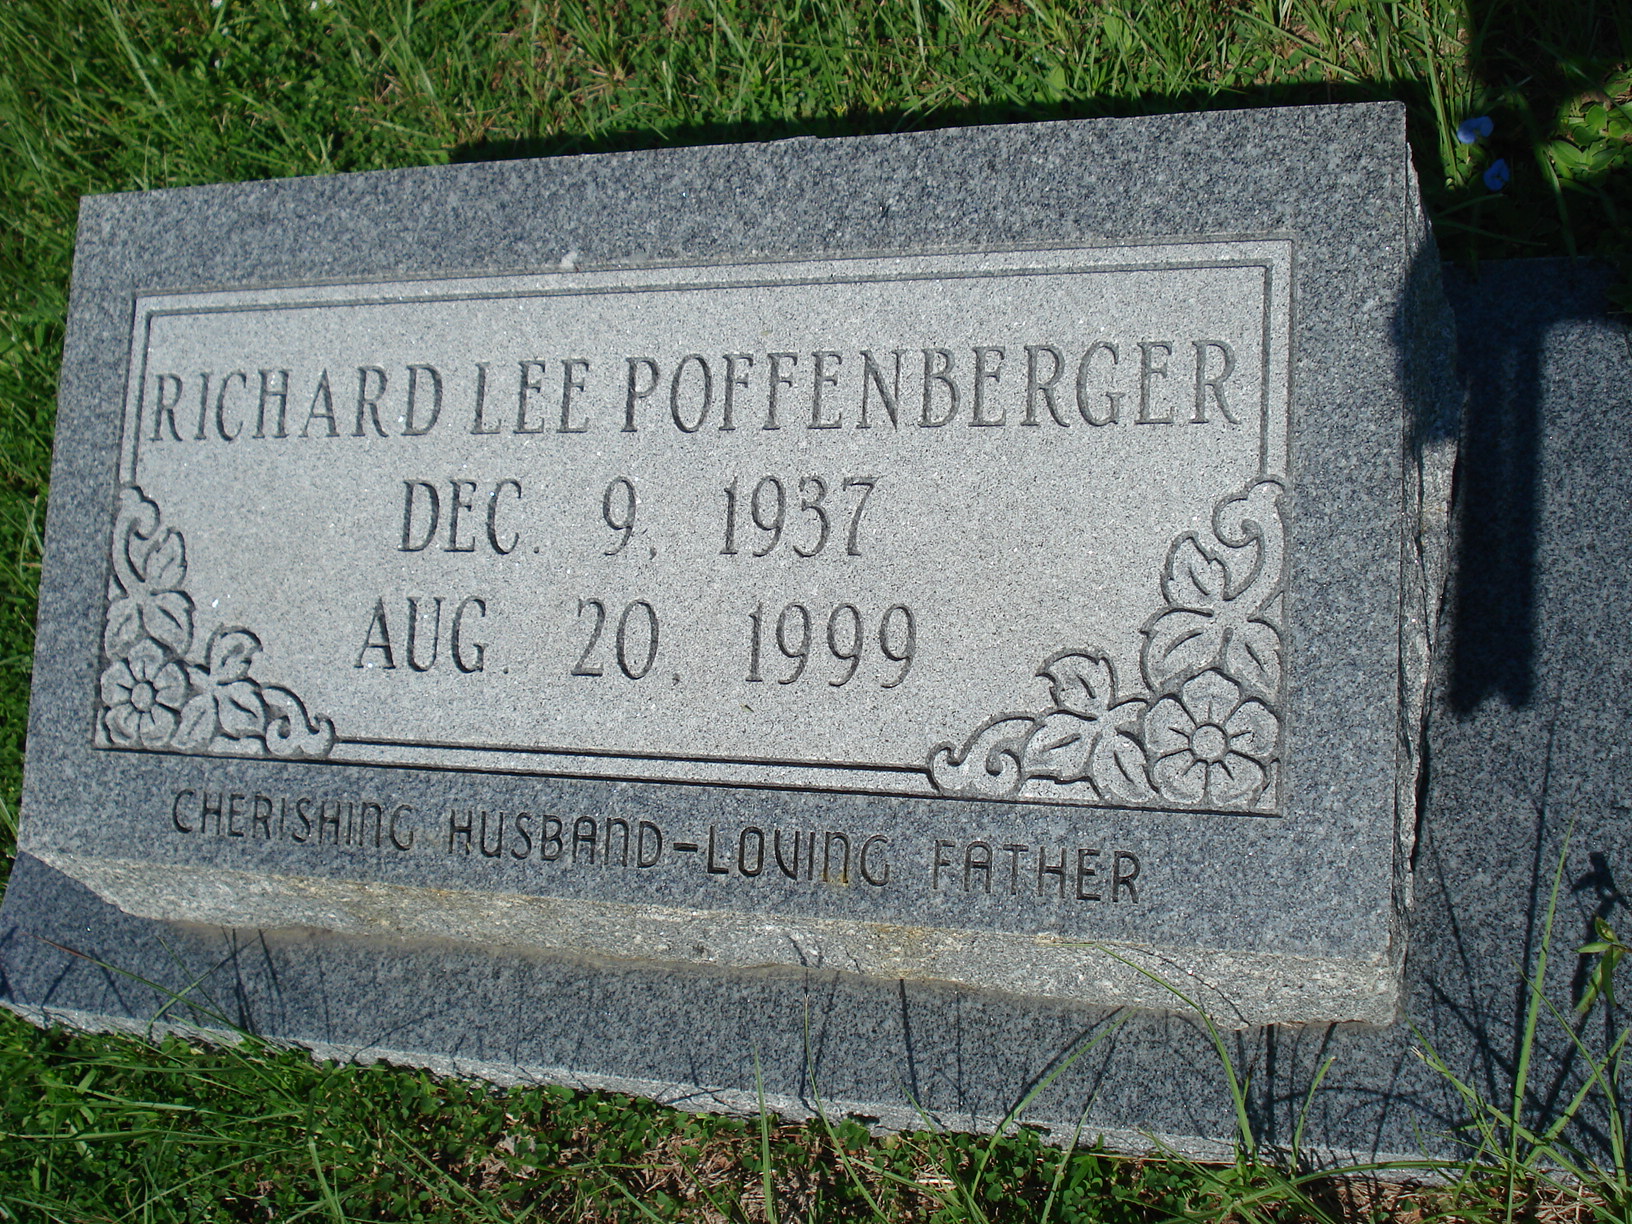 Richard Lee Poffenberger